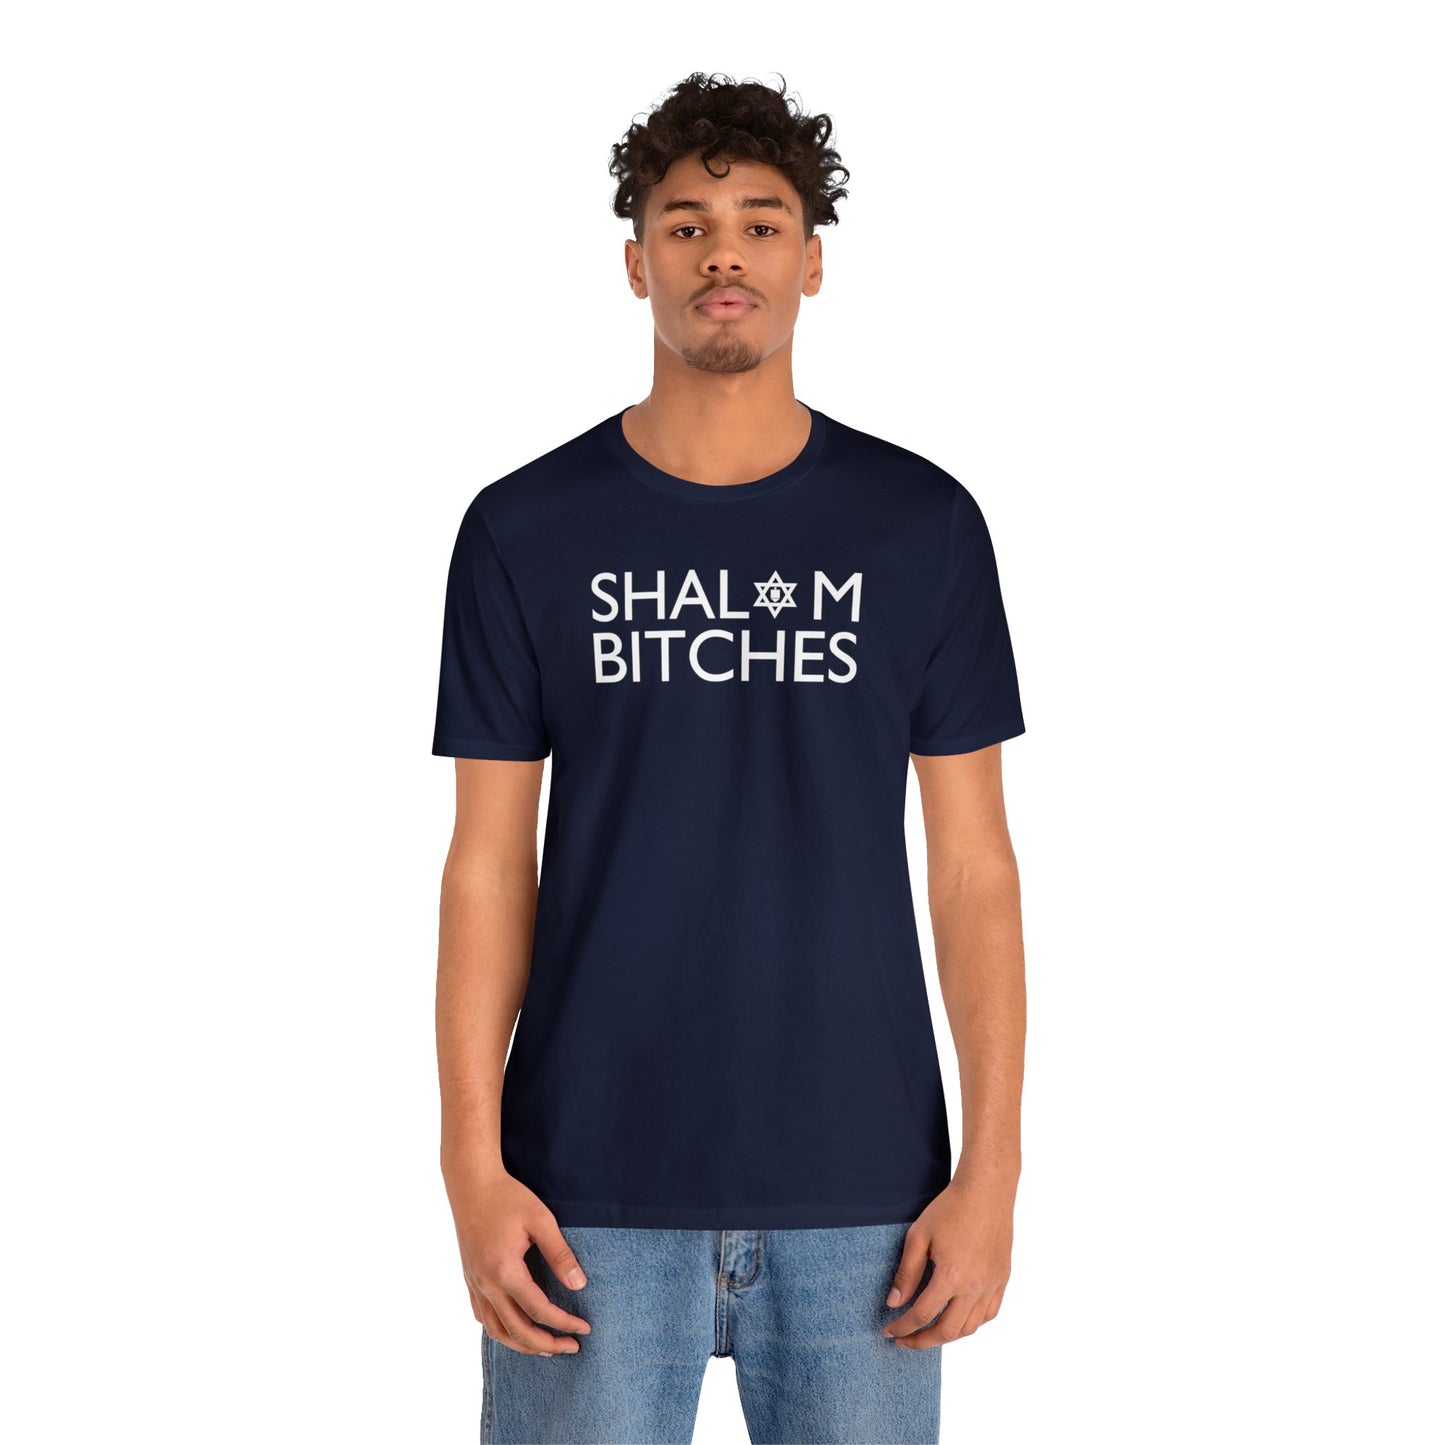 Shalom Bitches